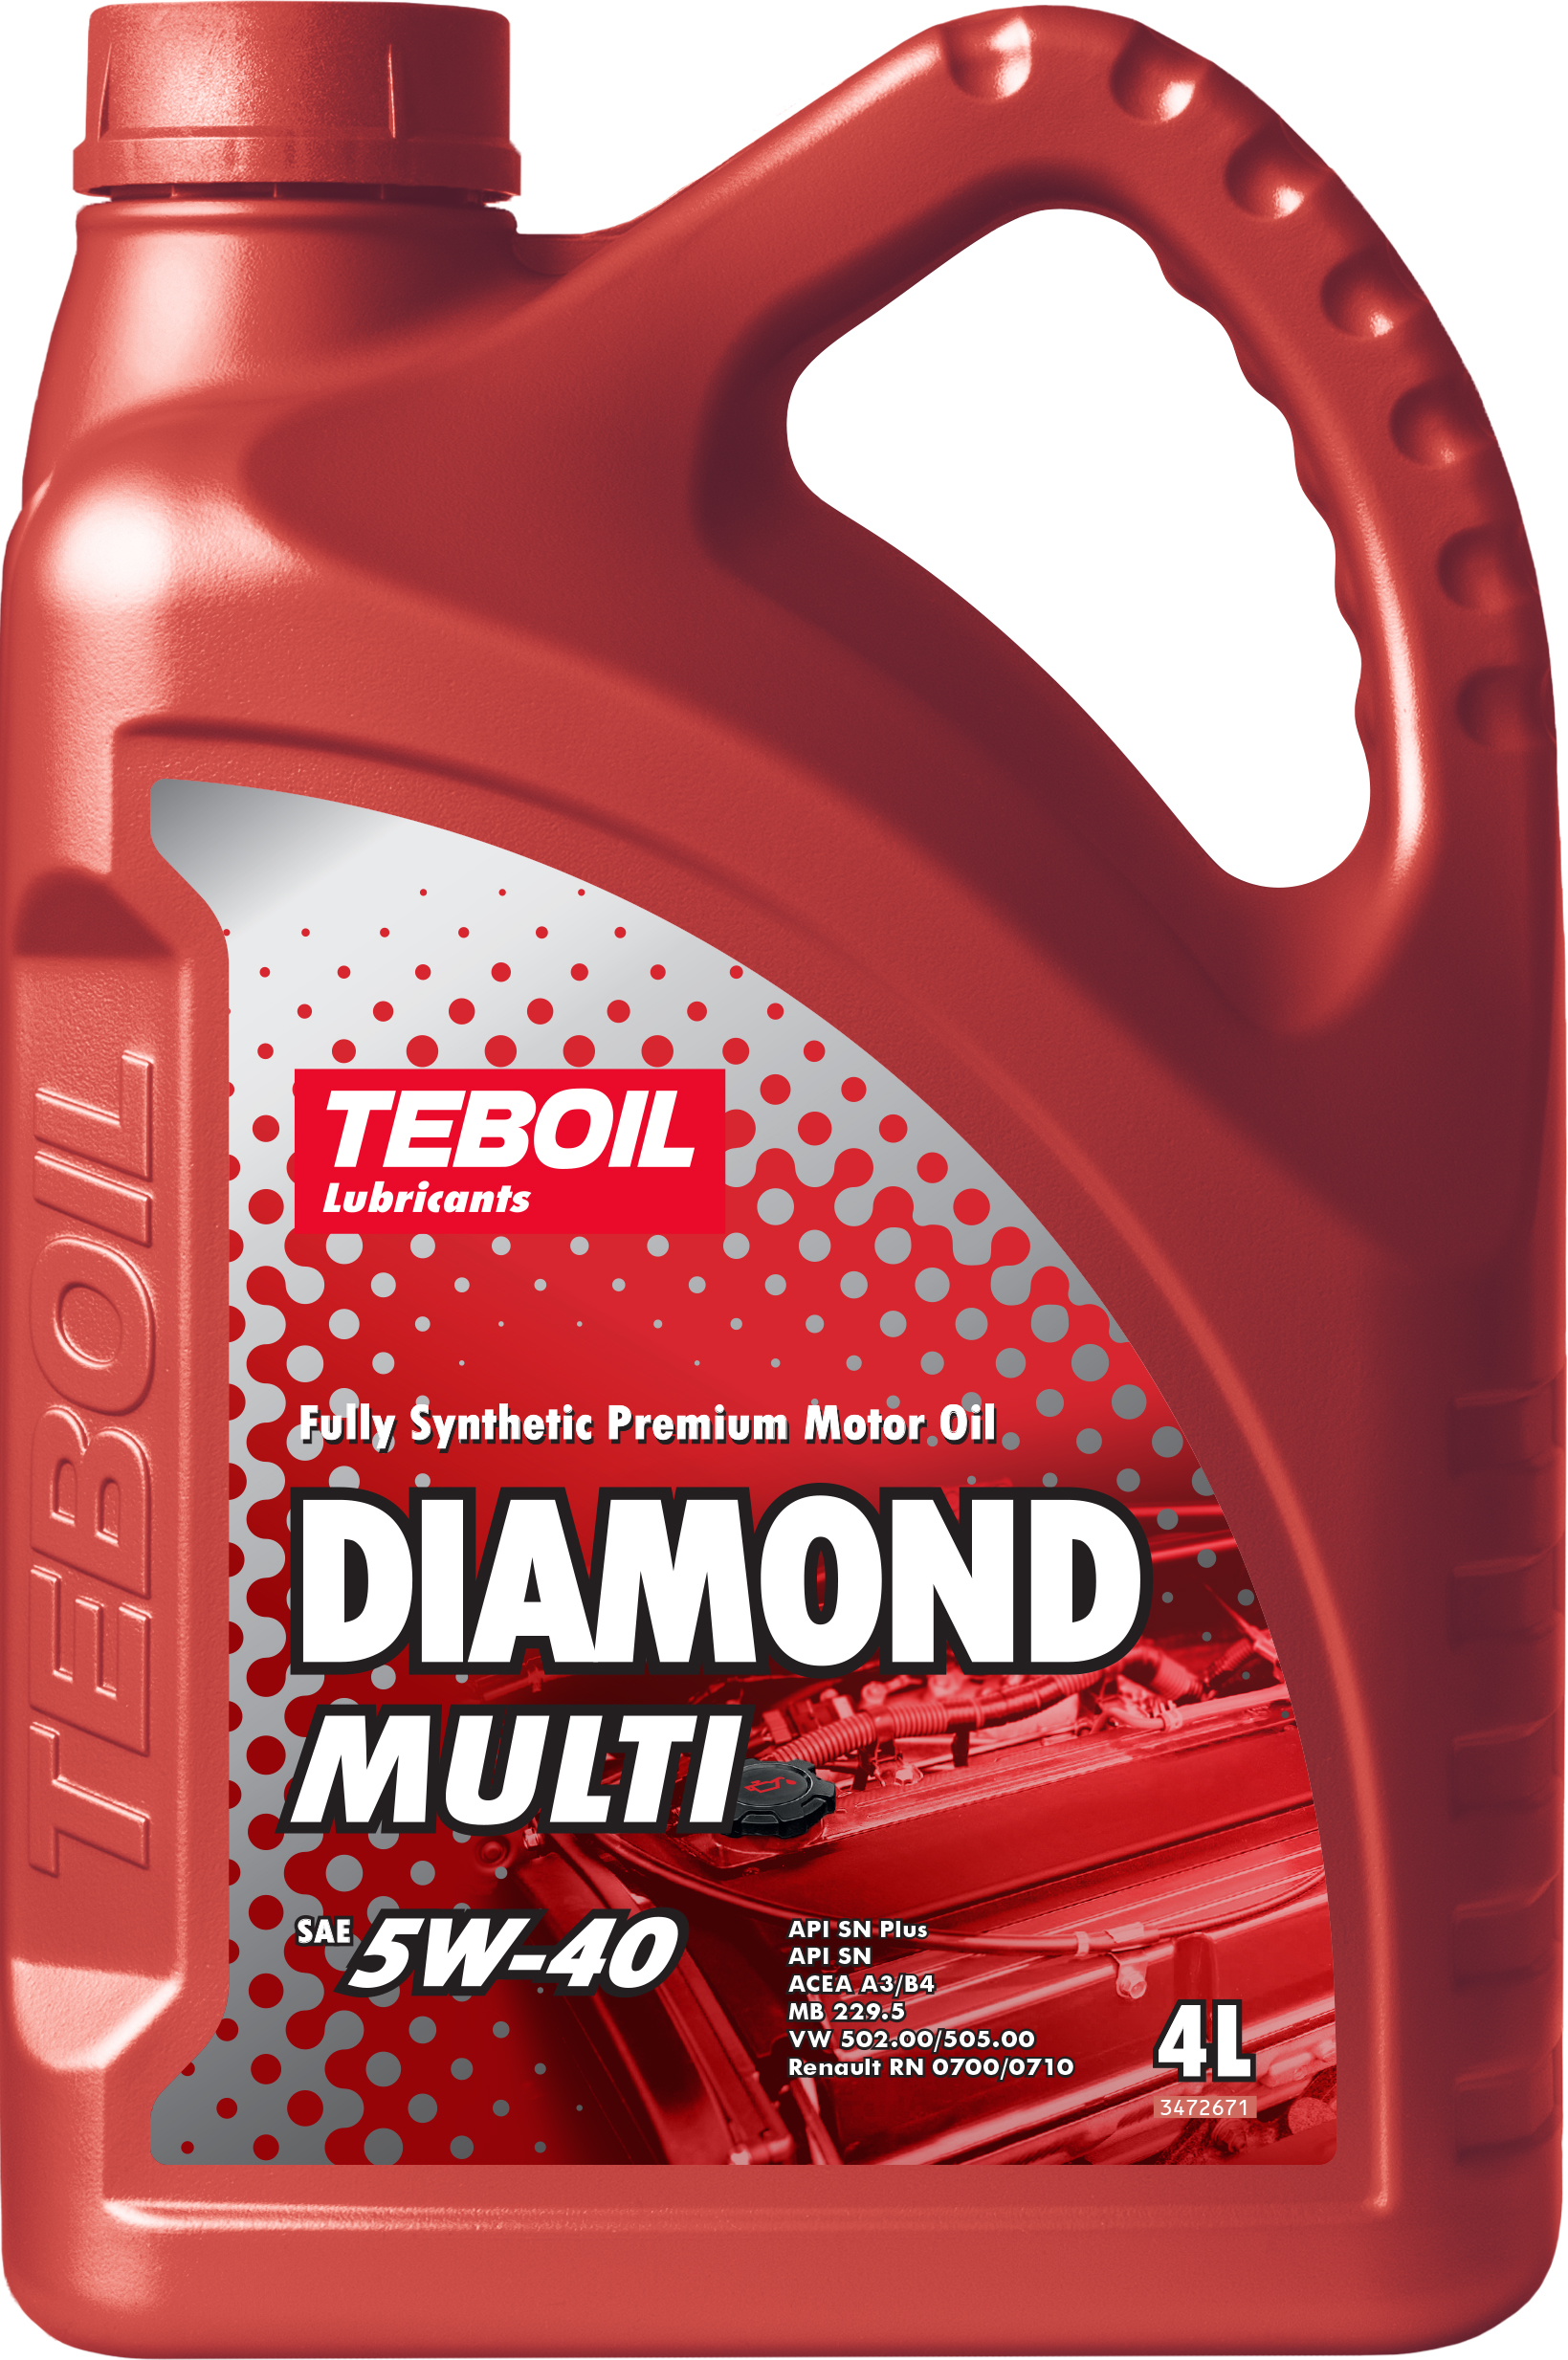 5w-40 Diamond Multi 4л (синт. мотор. масло) - TEBOIL 3455081